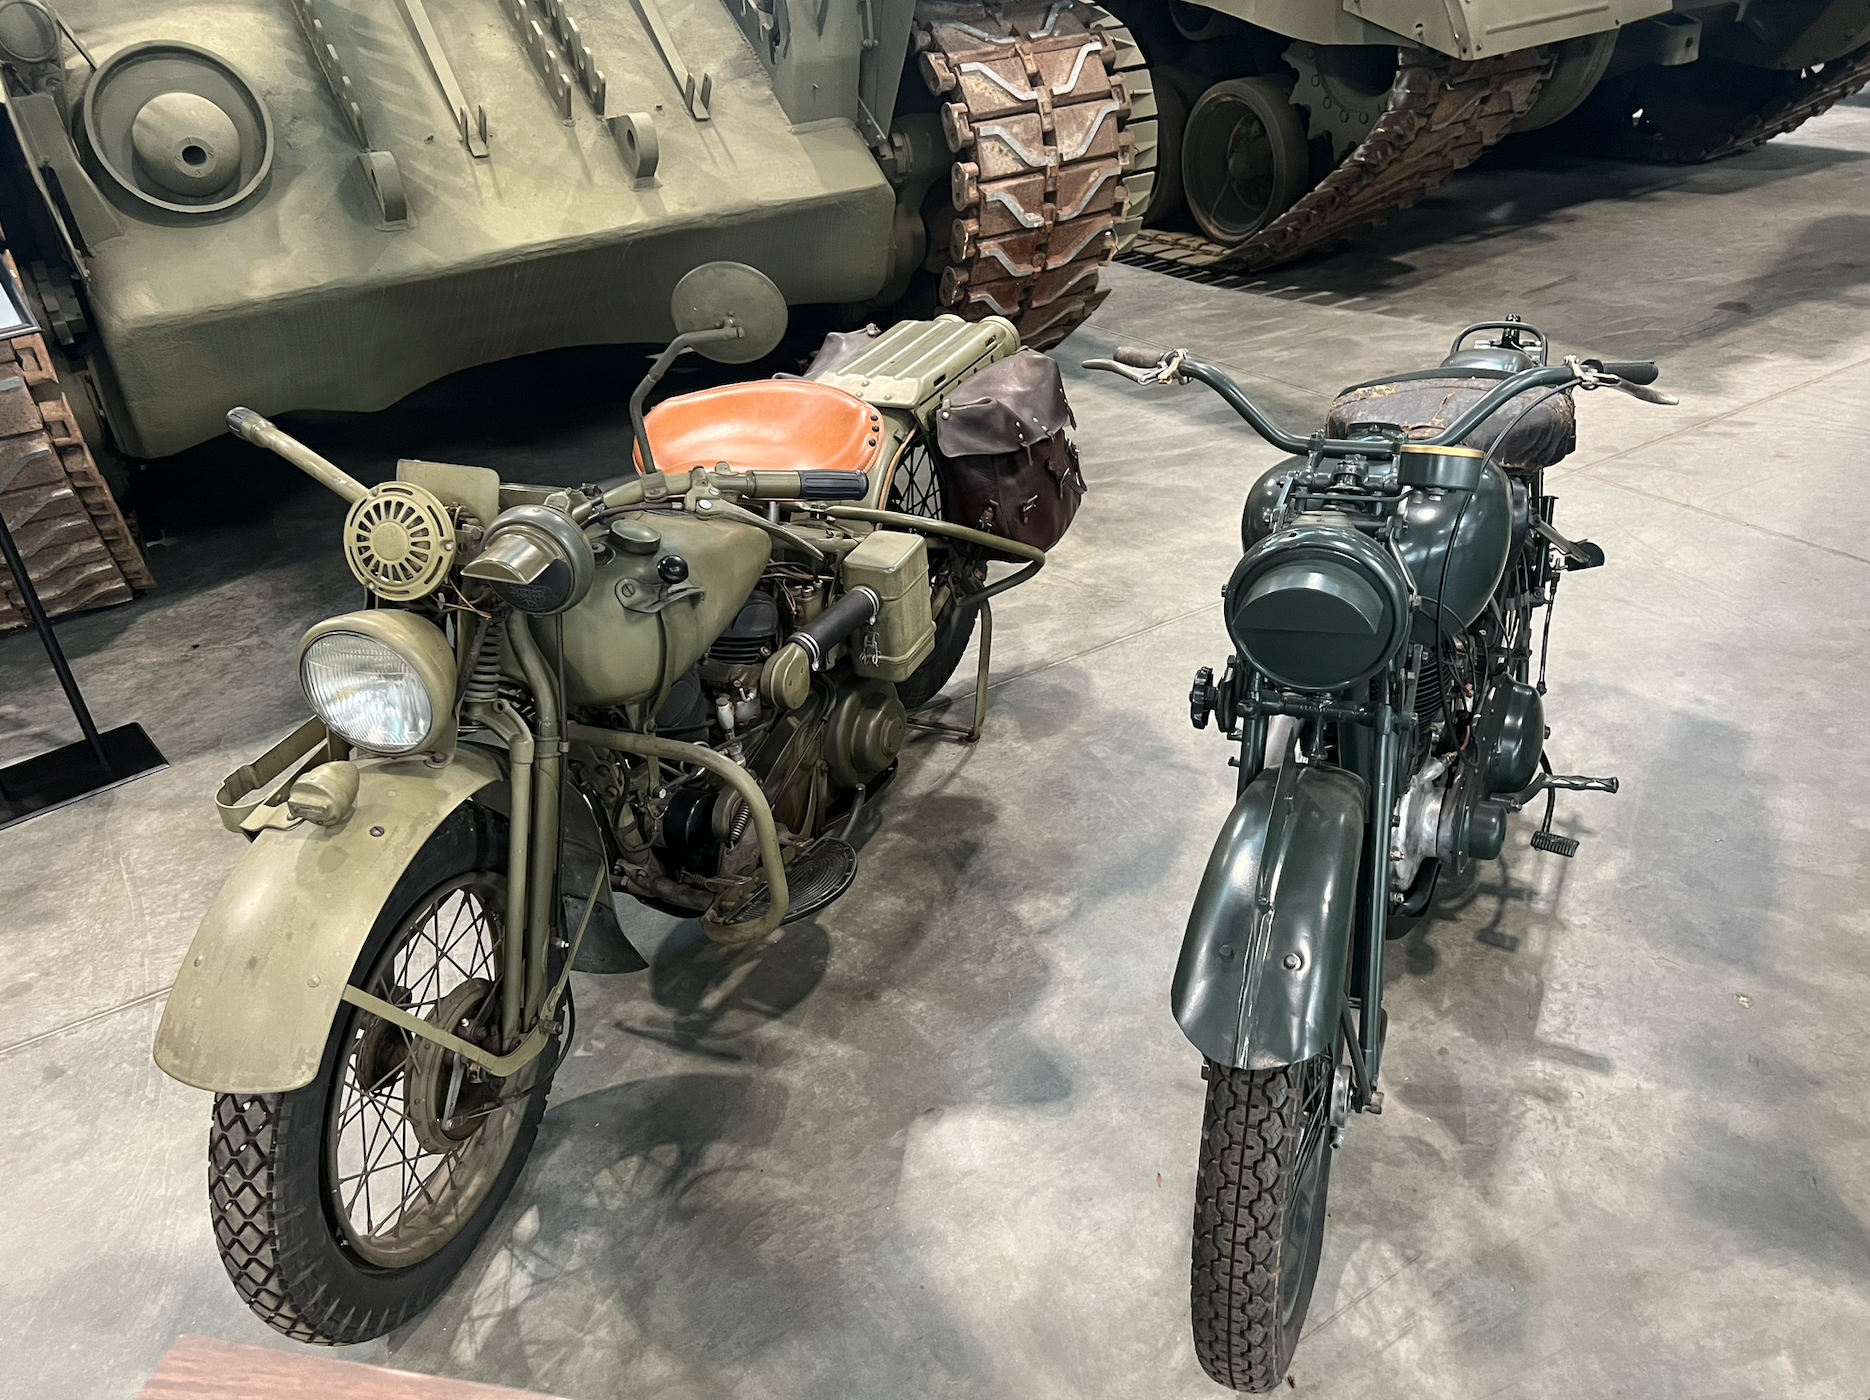 How World War II gave the world the ‘American Chopper’ motorcycle